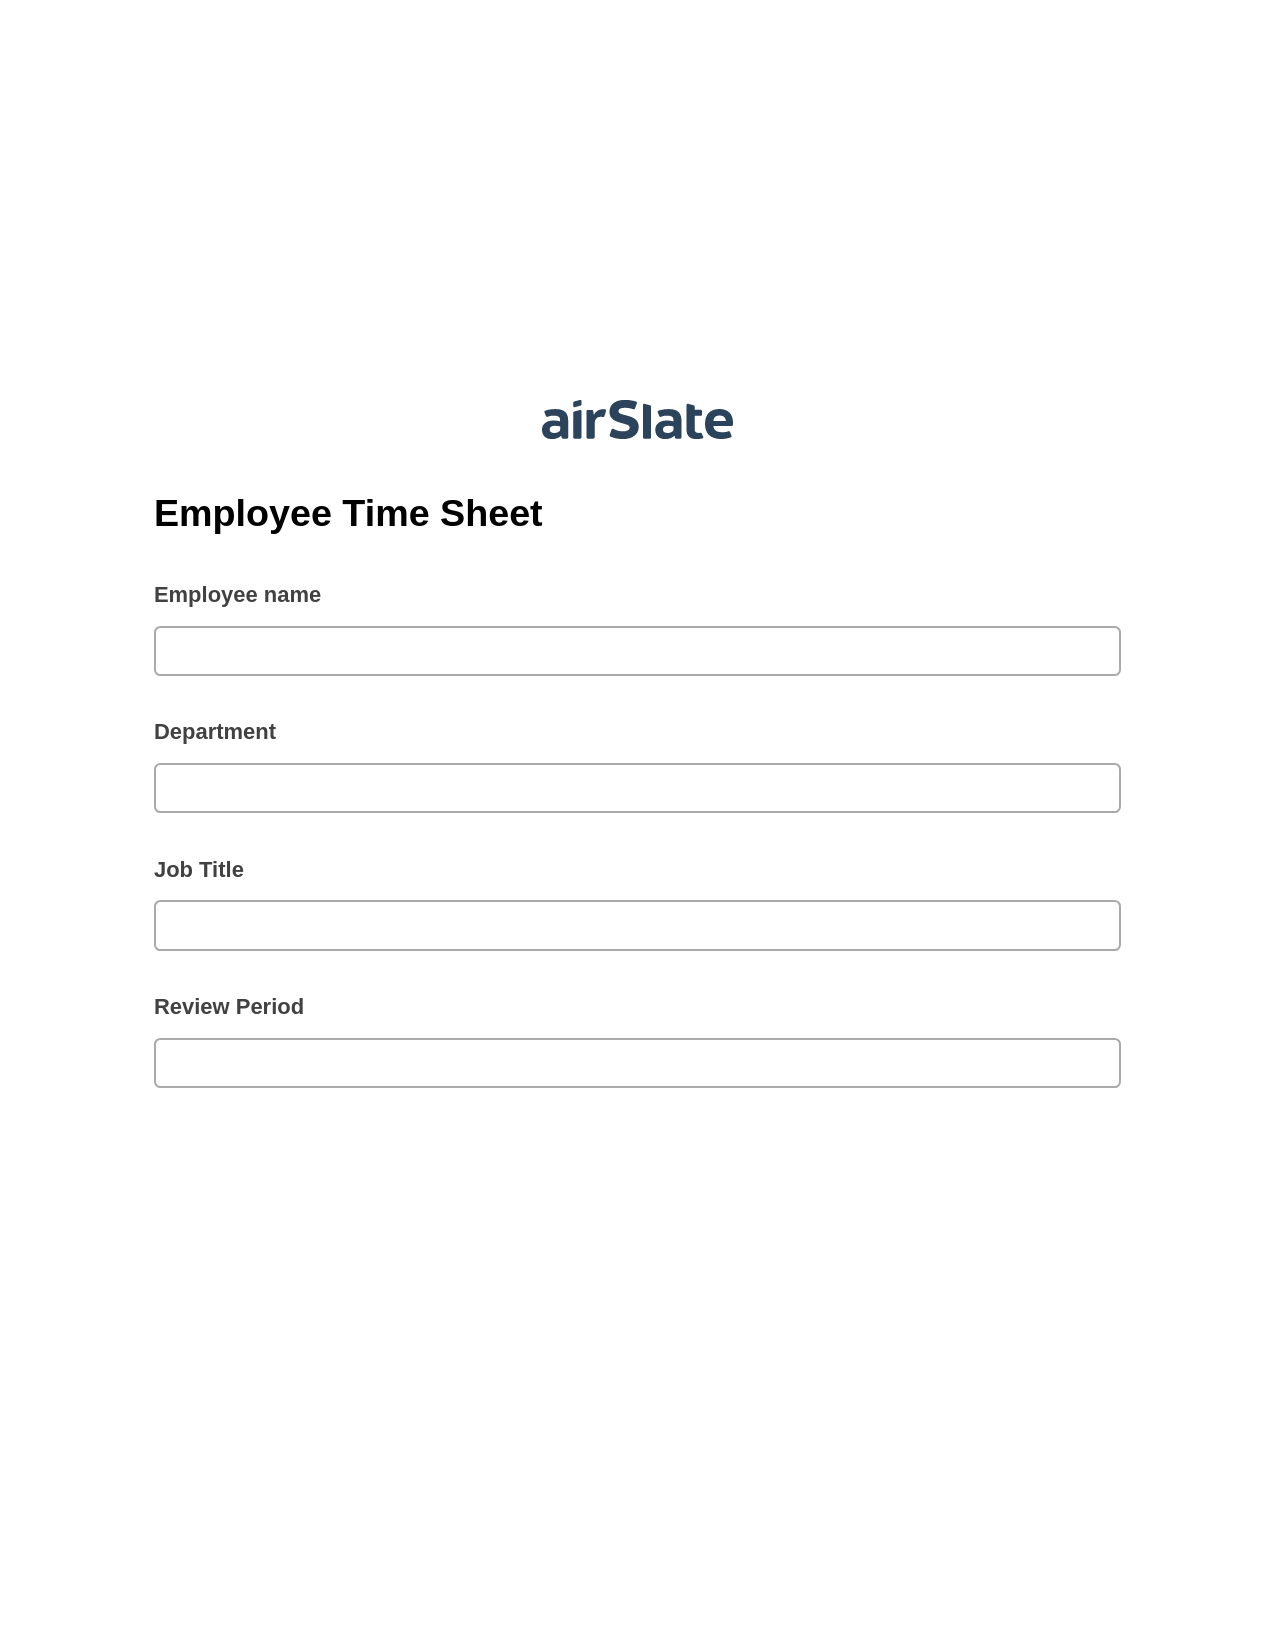 Multirole Employee Time Sheet Pre-fill from Excel Spreadsheet Bot, Update Audit Trail Bot, Slack Two-Way Binding Bot